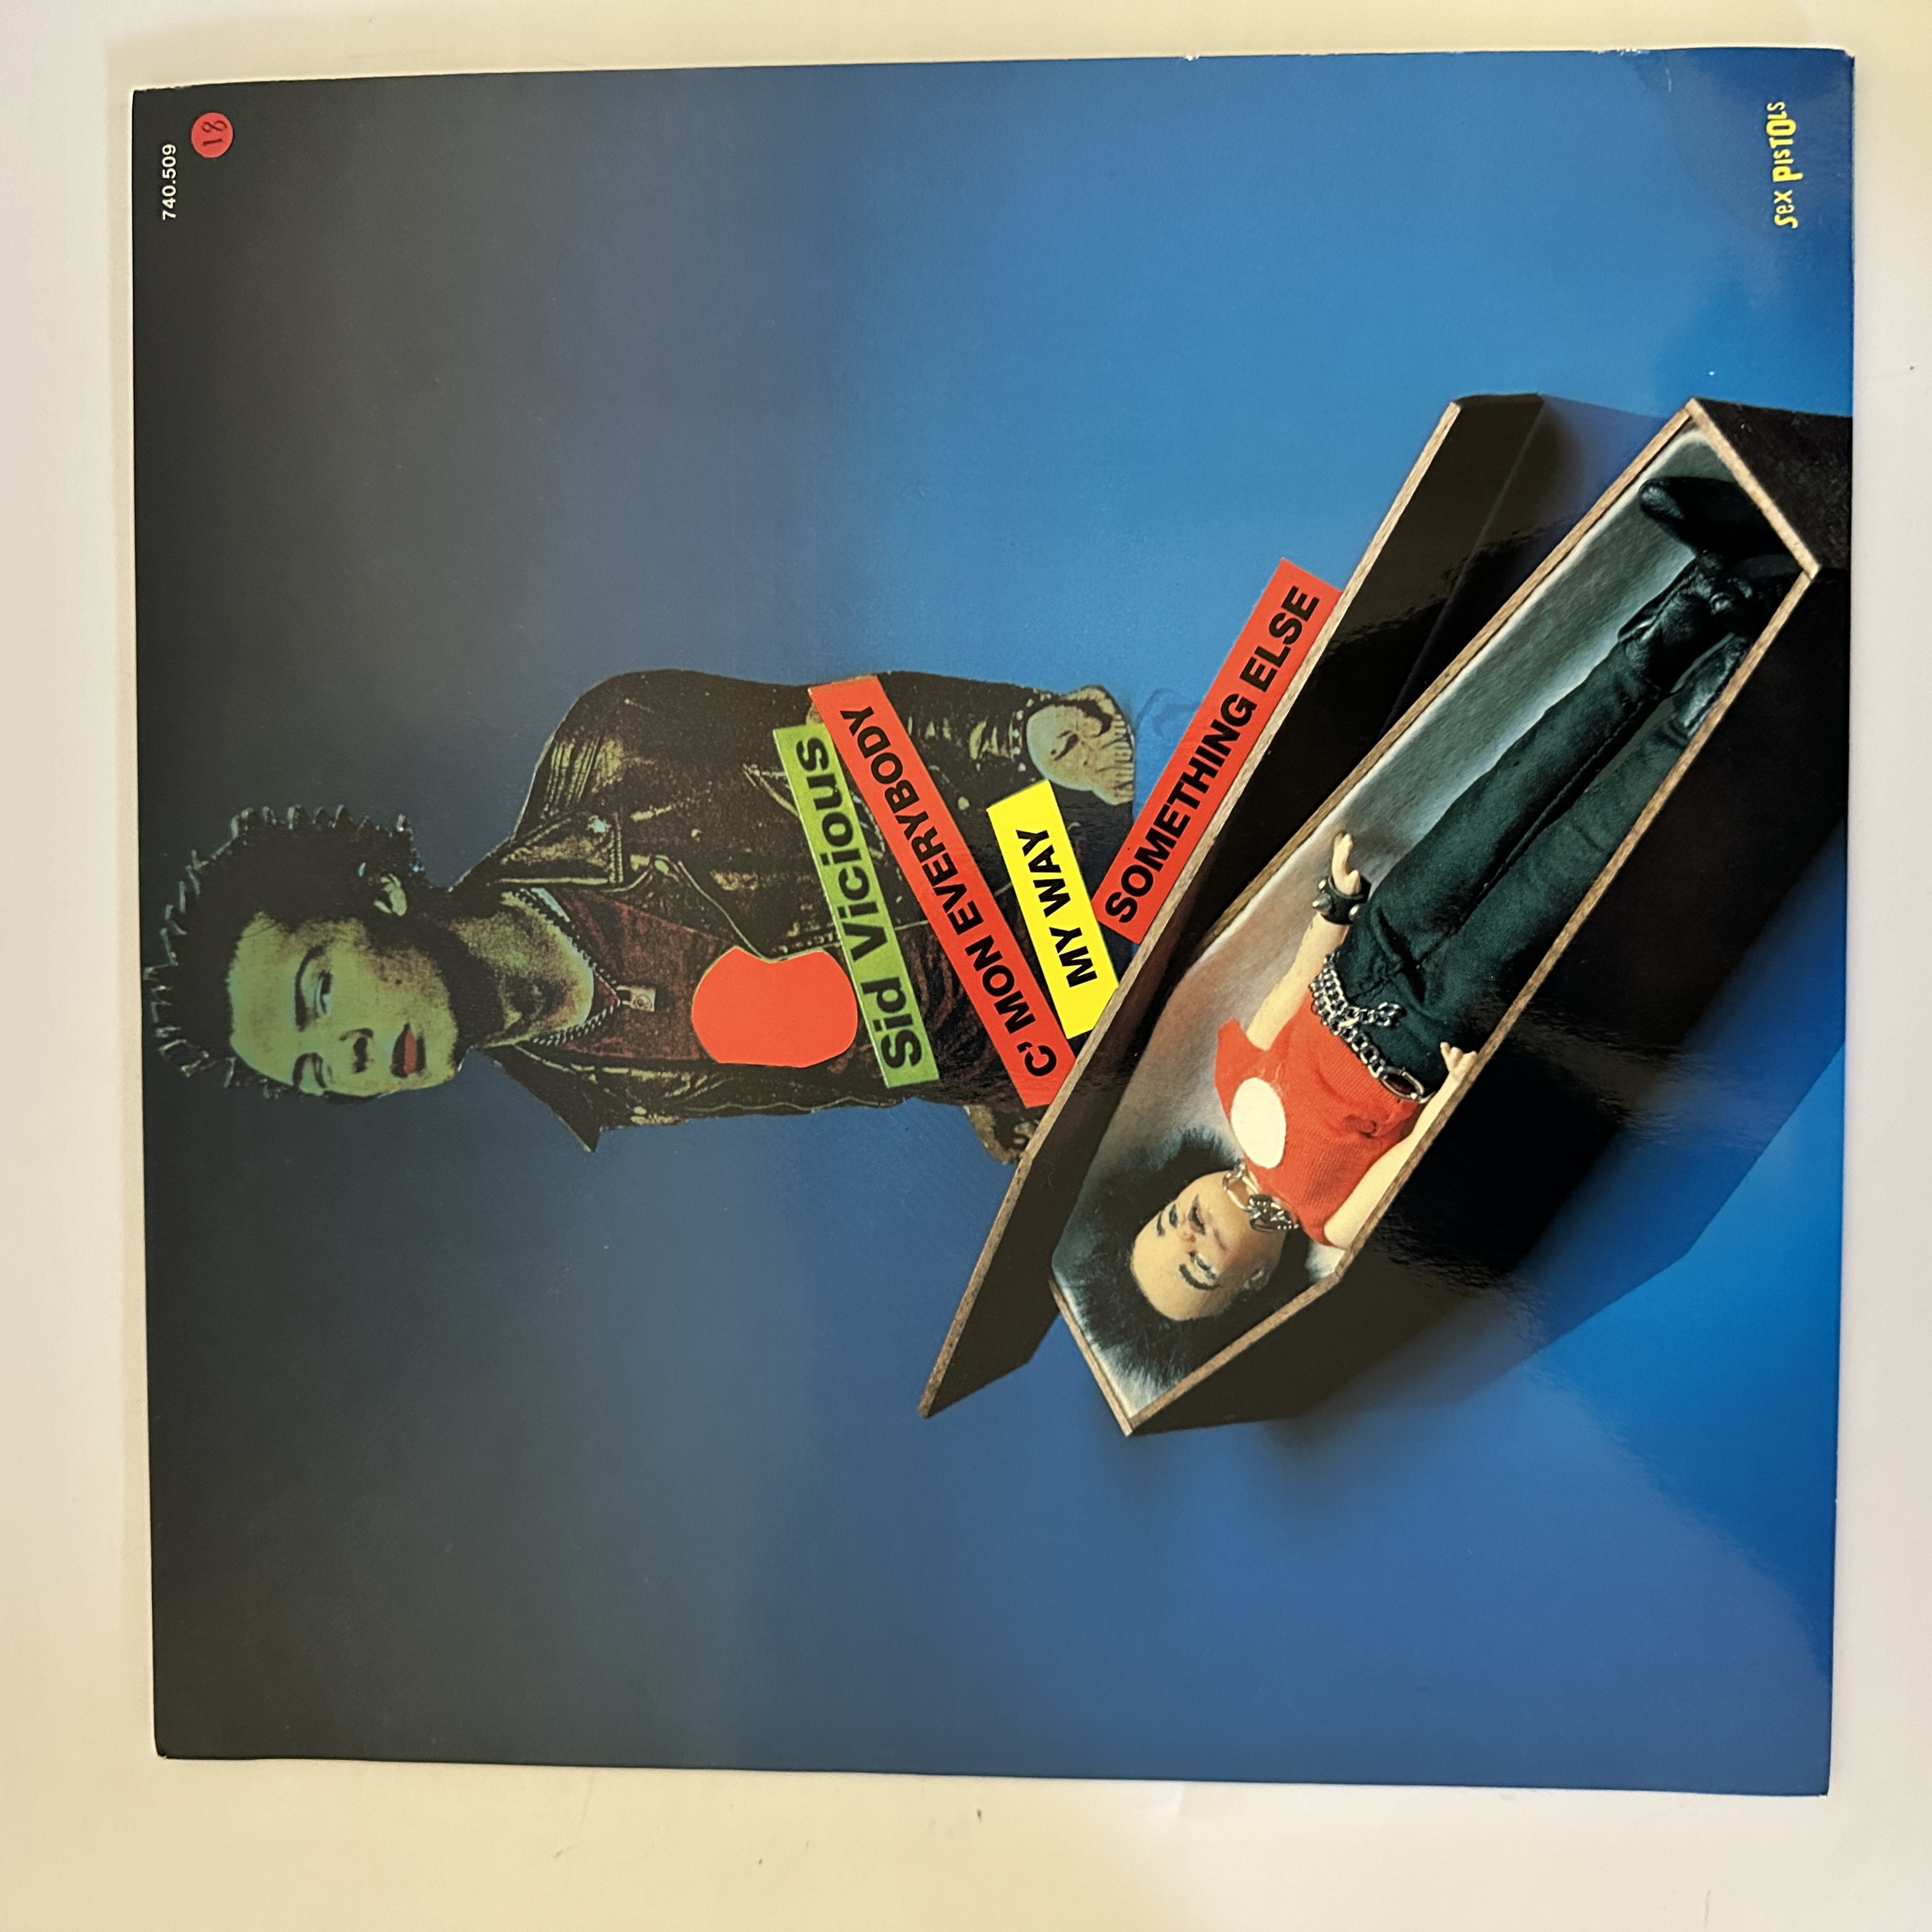 Sid Vicious - C'mon Everybody vinyl LP - Image 2 of 8